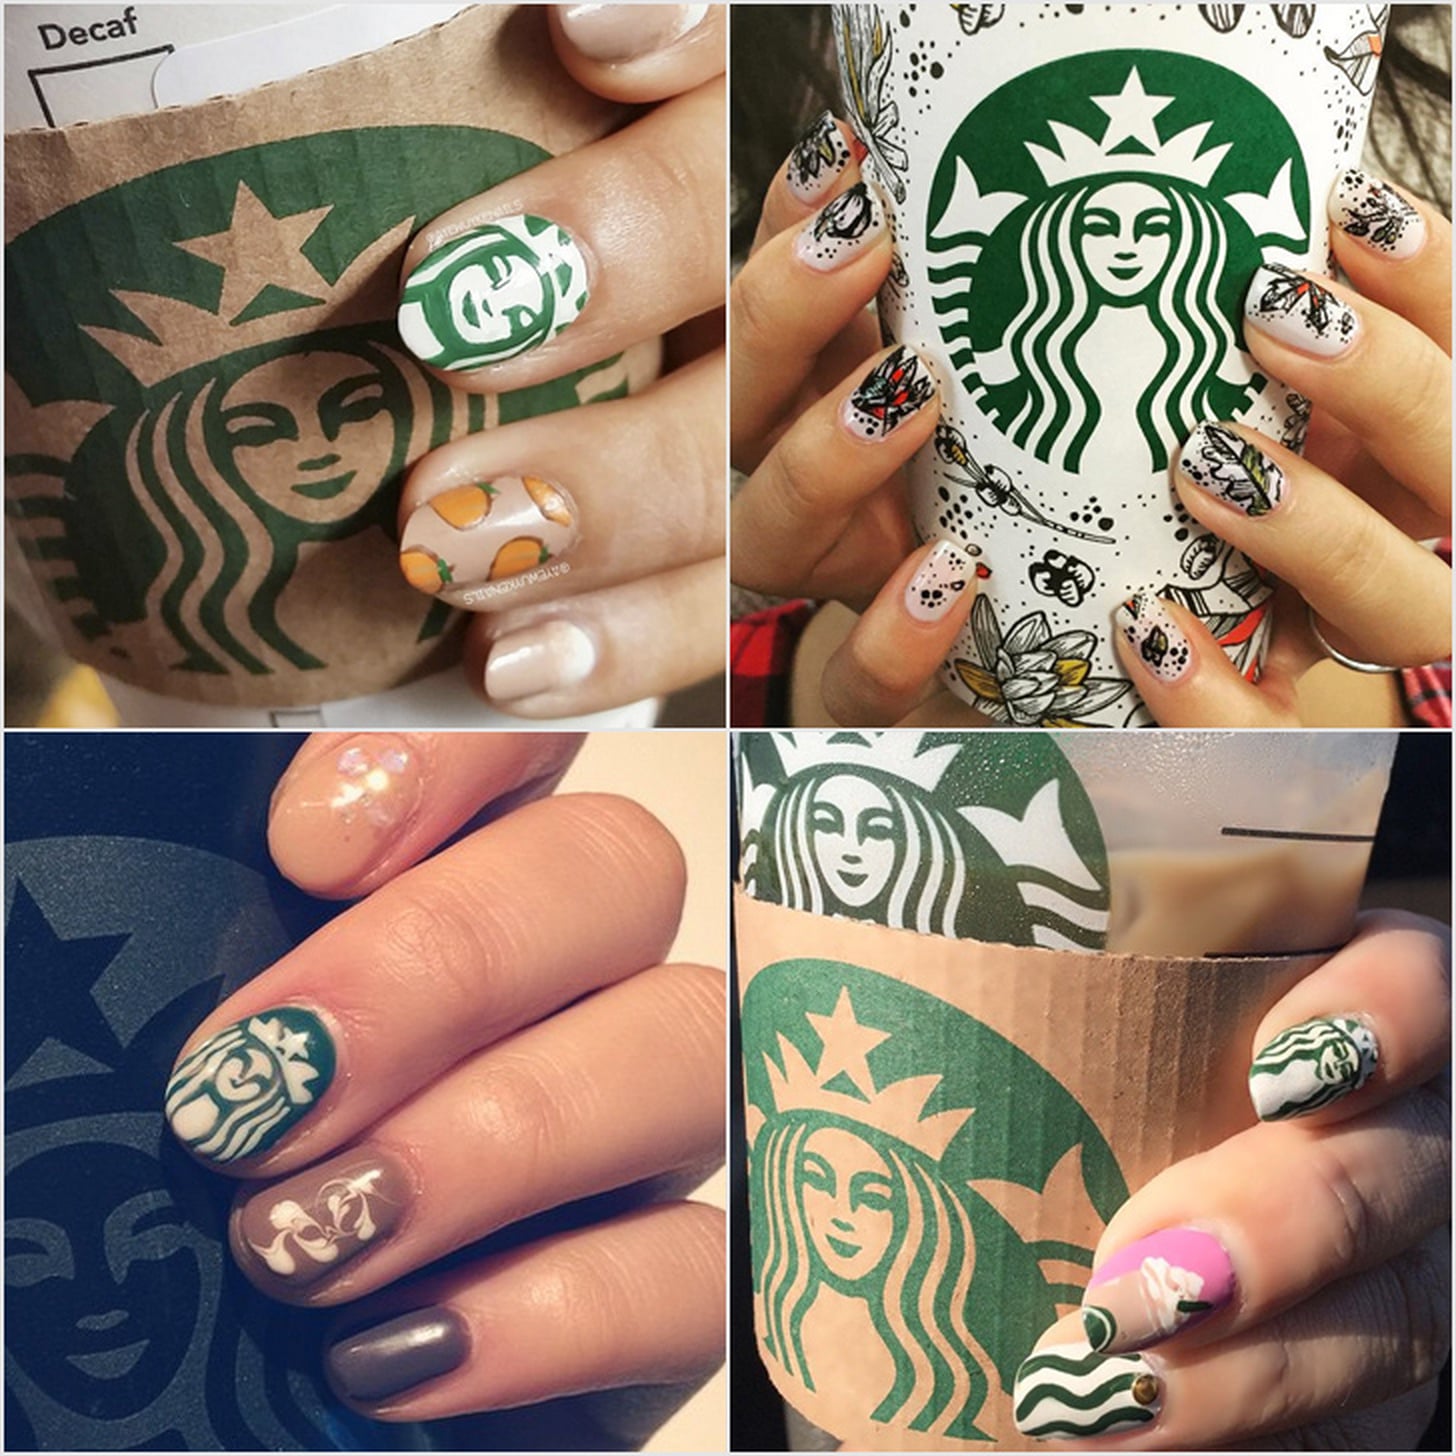 Starbucks Nail Art Ideas | POPSUGAR Beauty